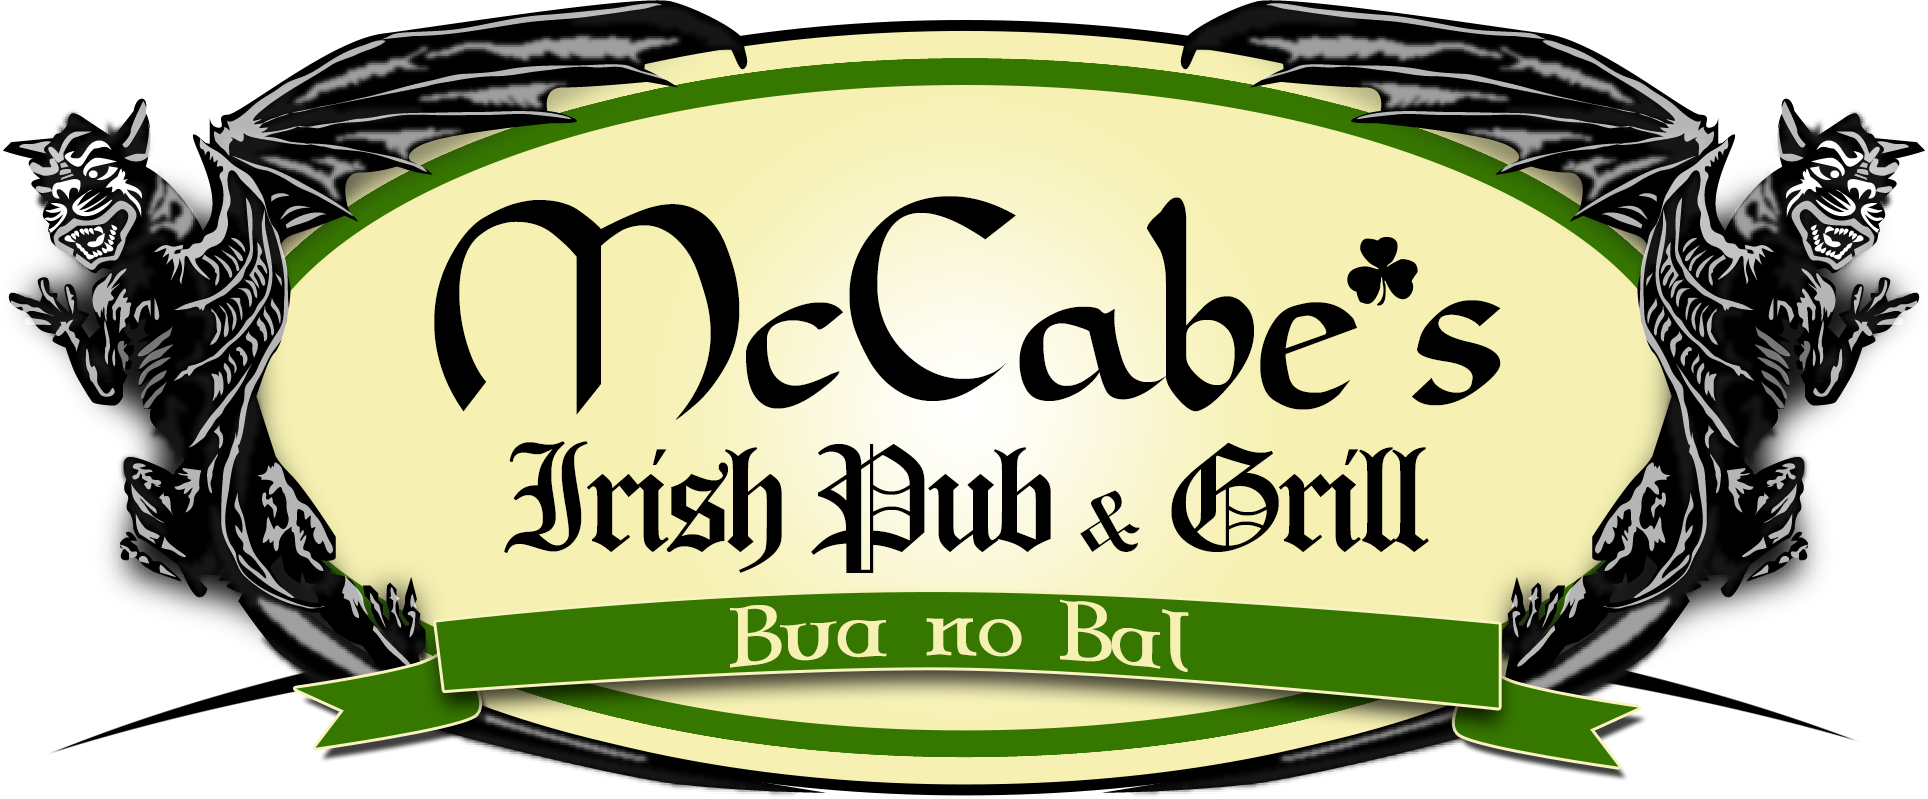 McCabes Irish Pub & Grill